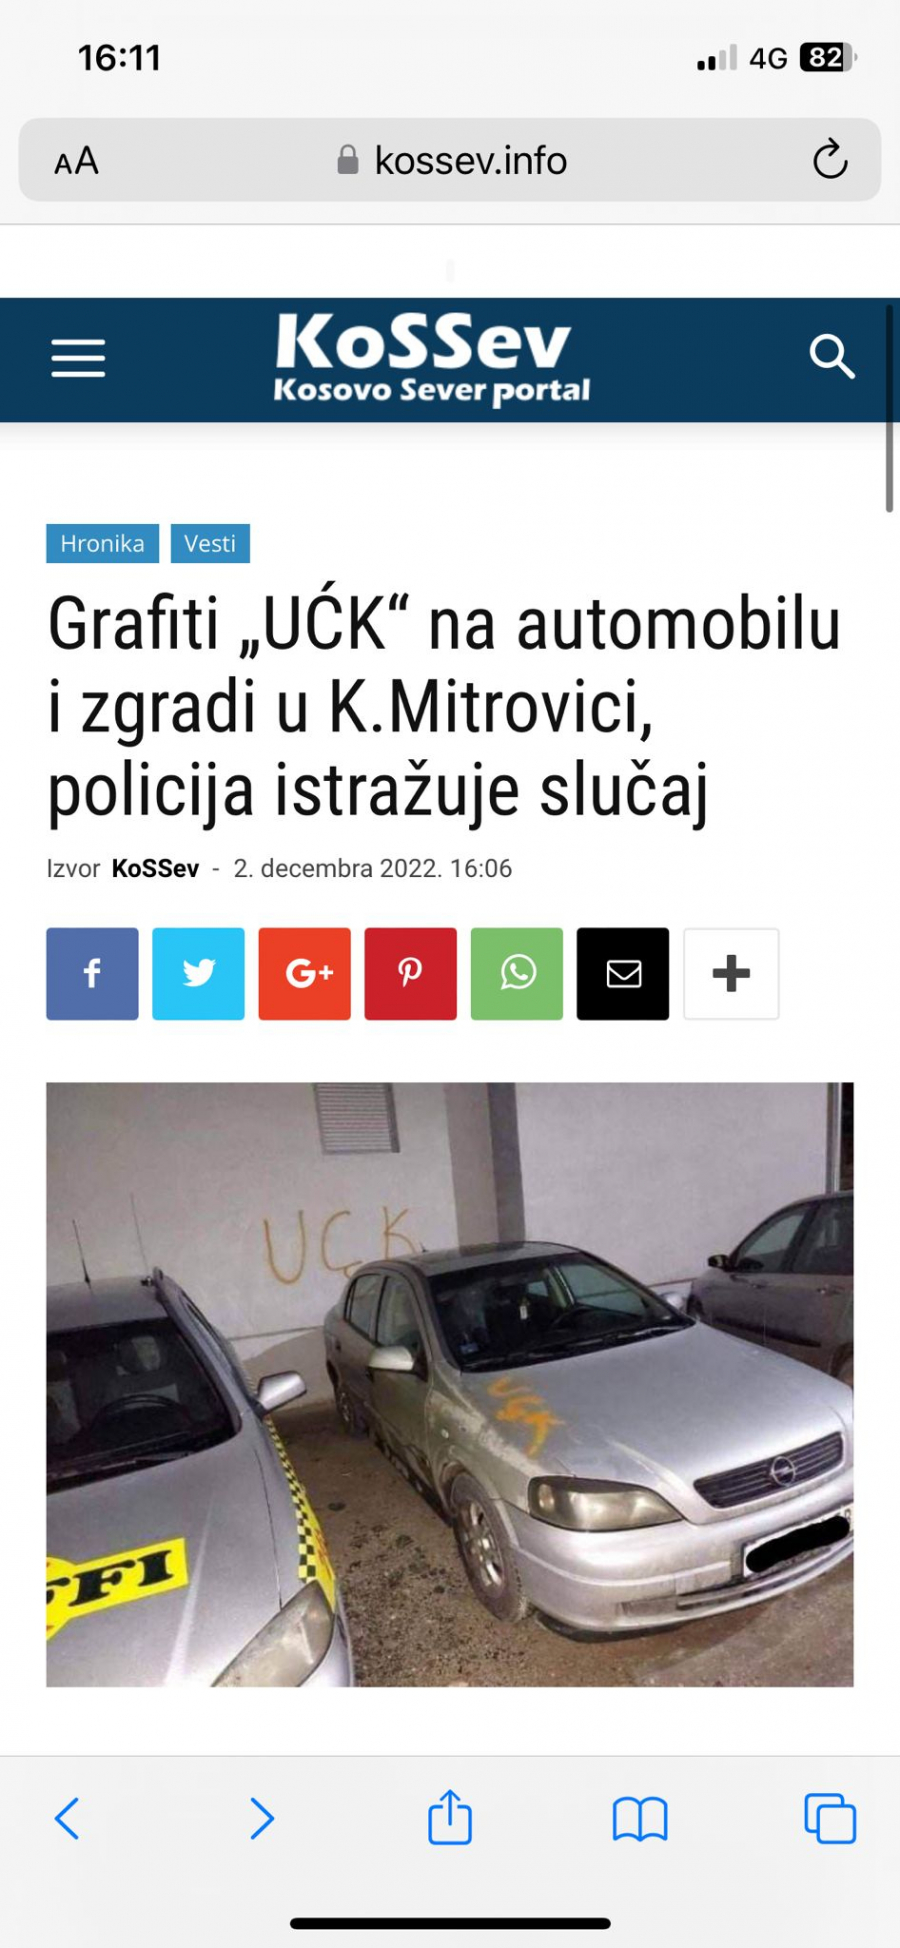 KURTI PUSTIO KEROVE S LANCA Zastrašuje Srbe i priziva zlo - novo šiptarsko orgijanje u Kosovskoj Mitrovici (FOTO)